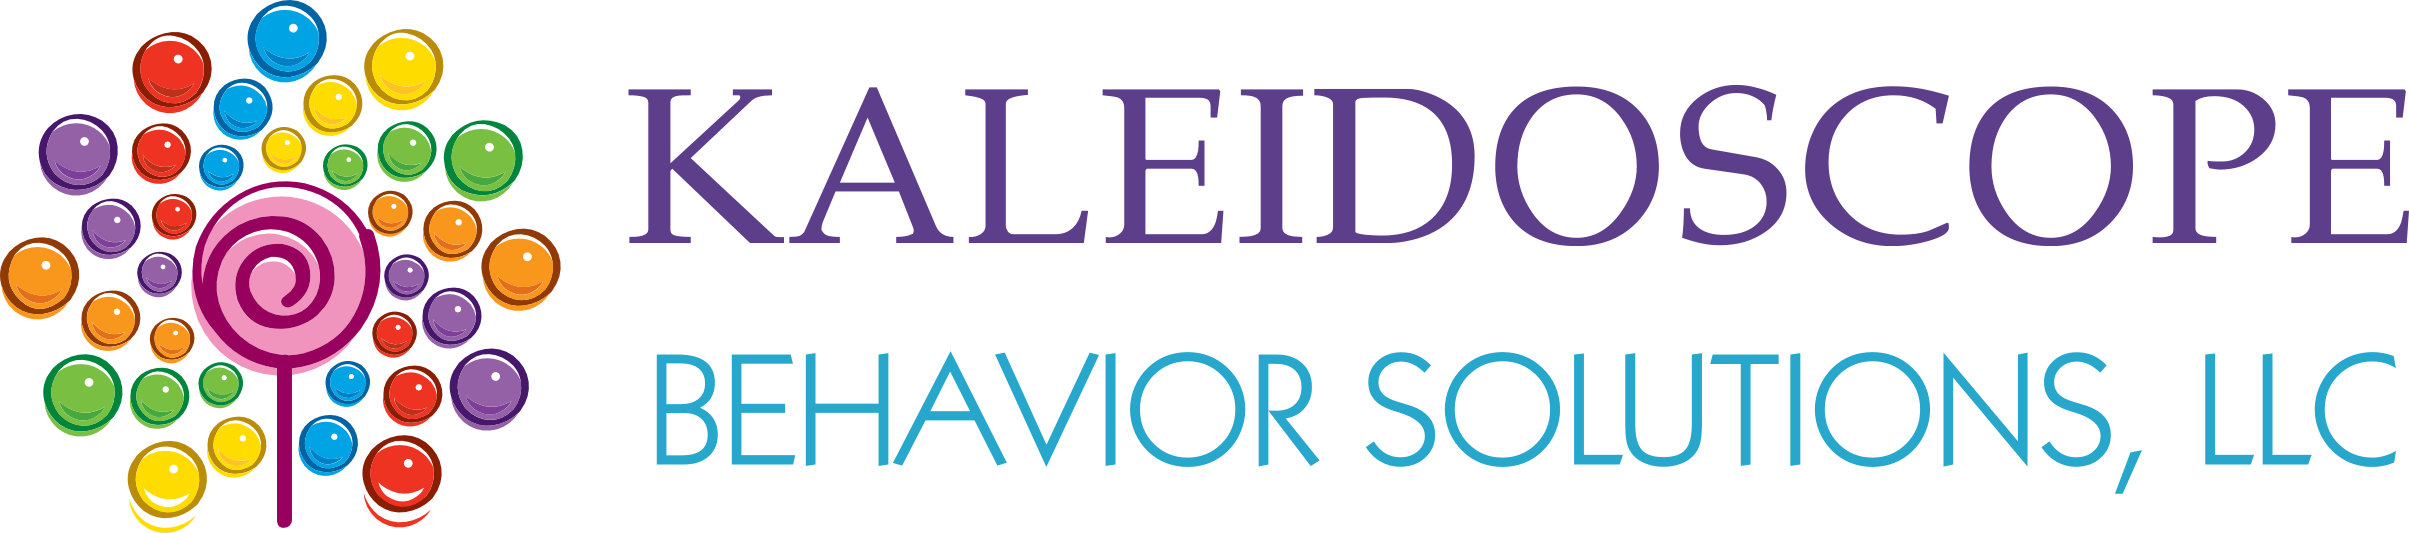 KALEIDOSCOPE BEHAVIOR SOLUTIONS, LLC